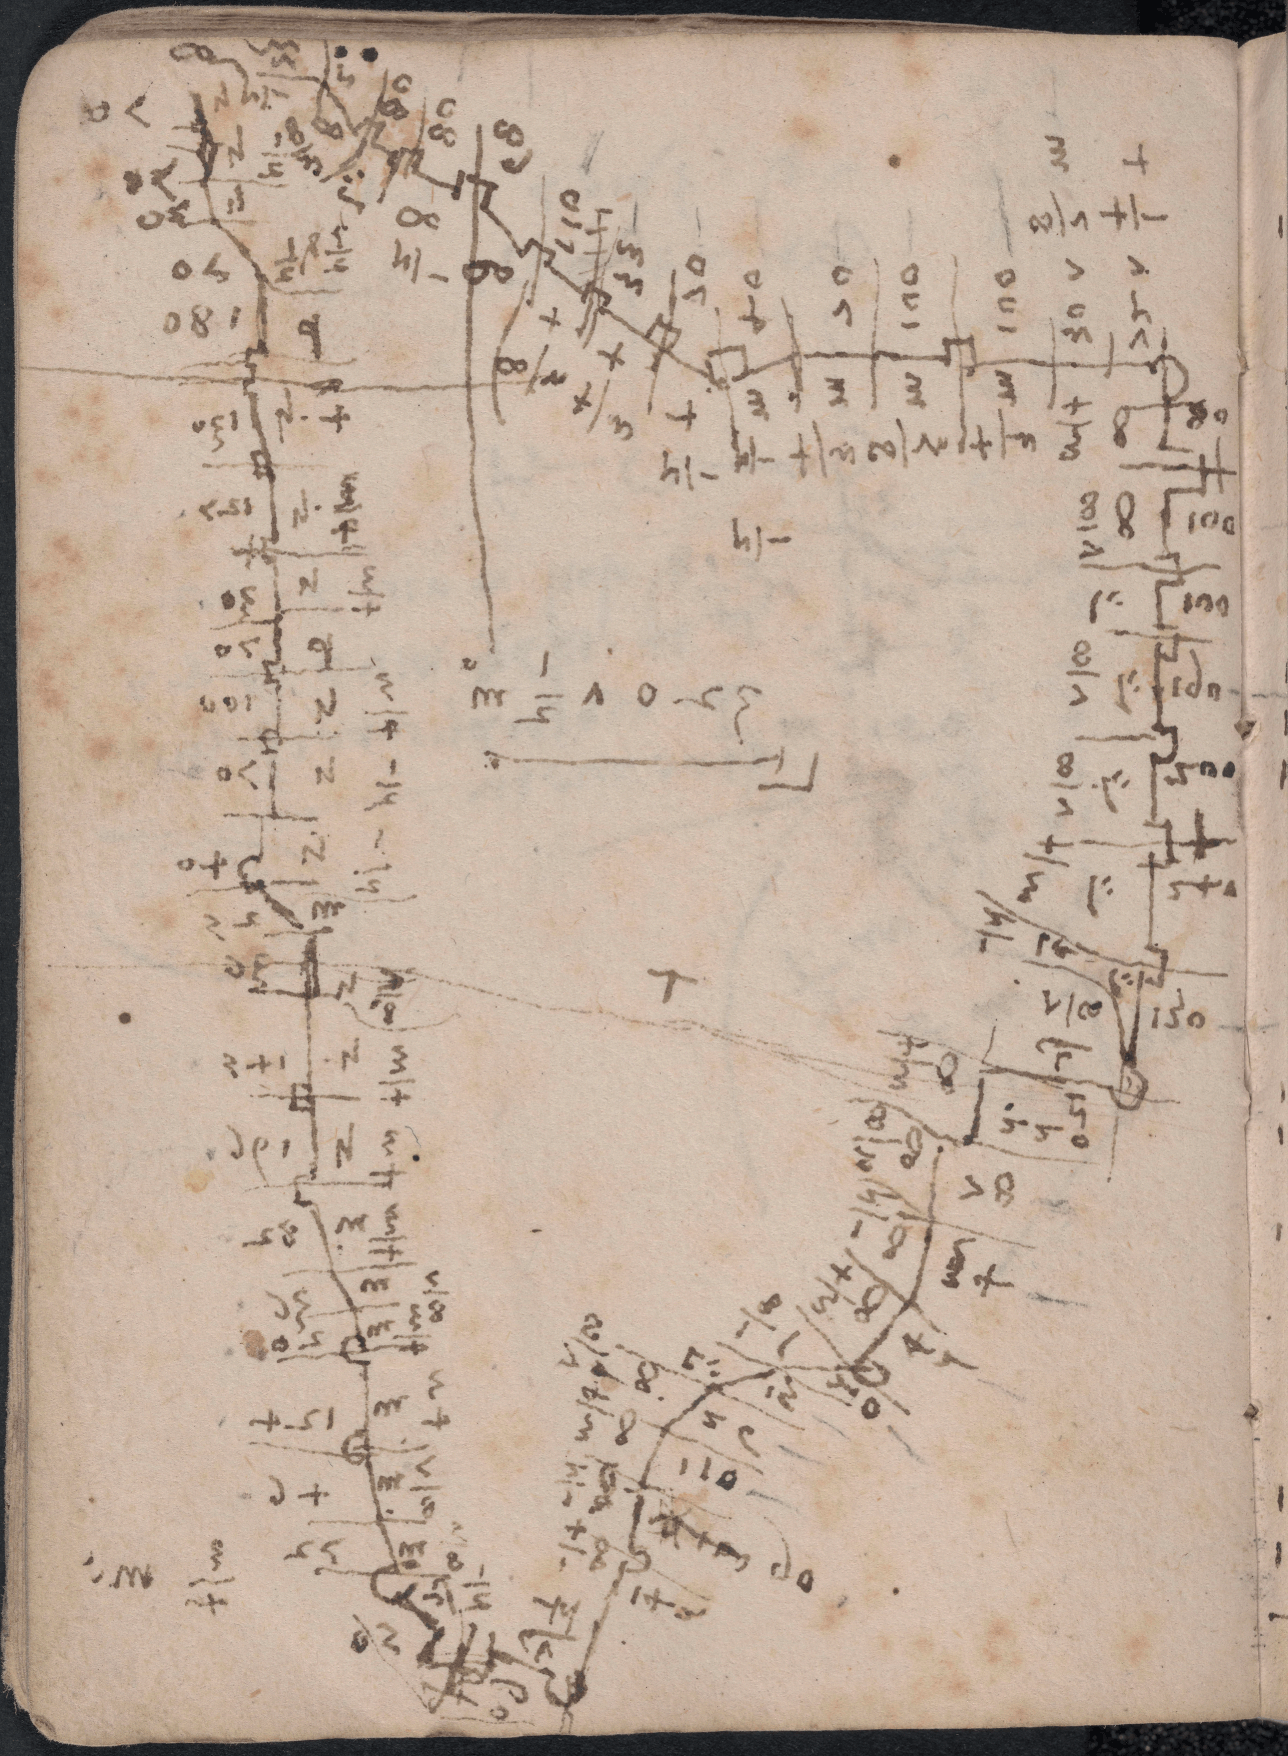 Narváez, Luys de (c.1500 - c.1550) sheet music